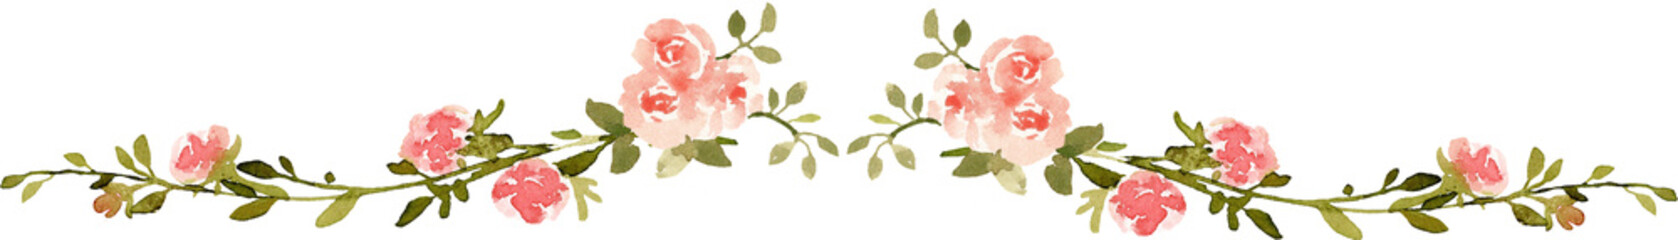 Vintage roses design element composition. Watercolor illustration - 758690277